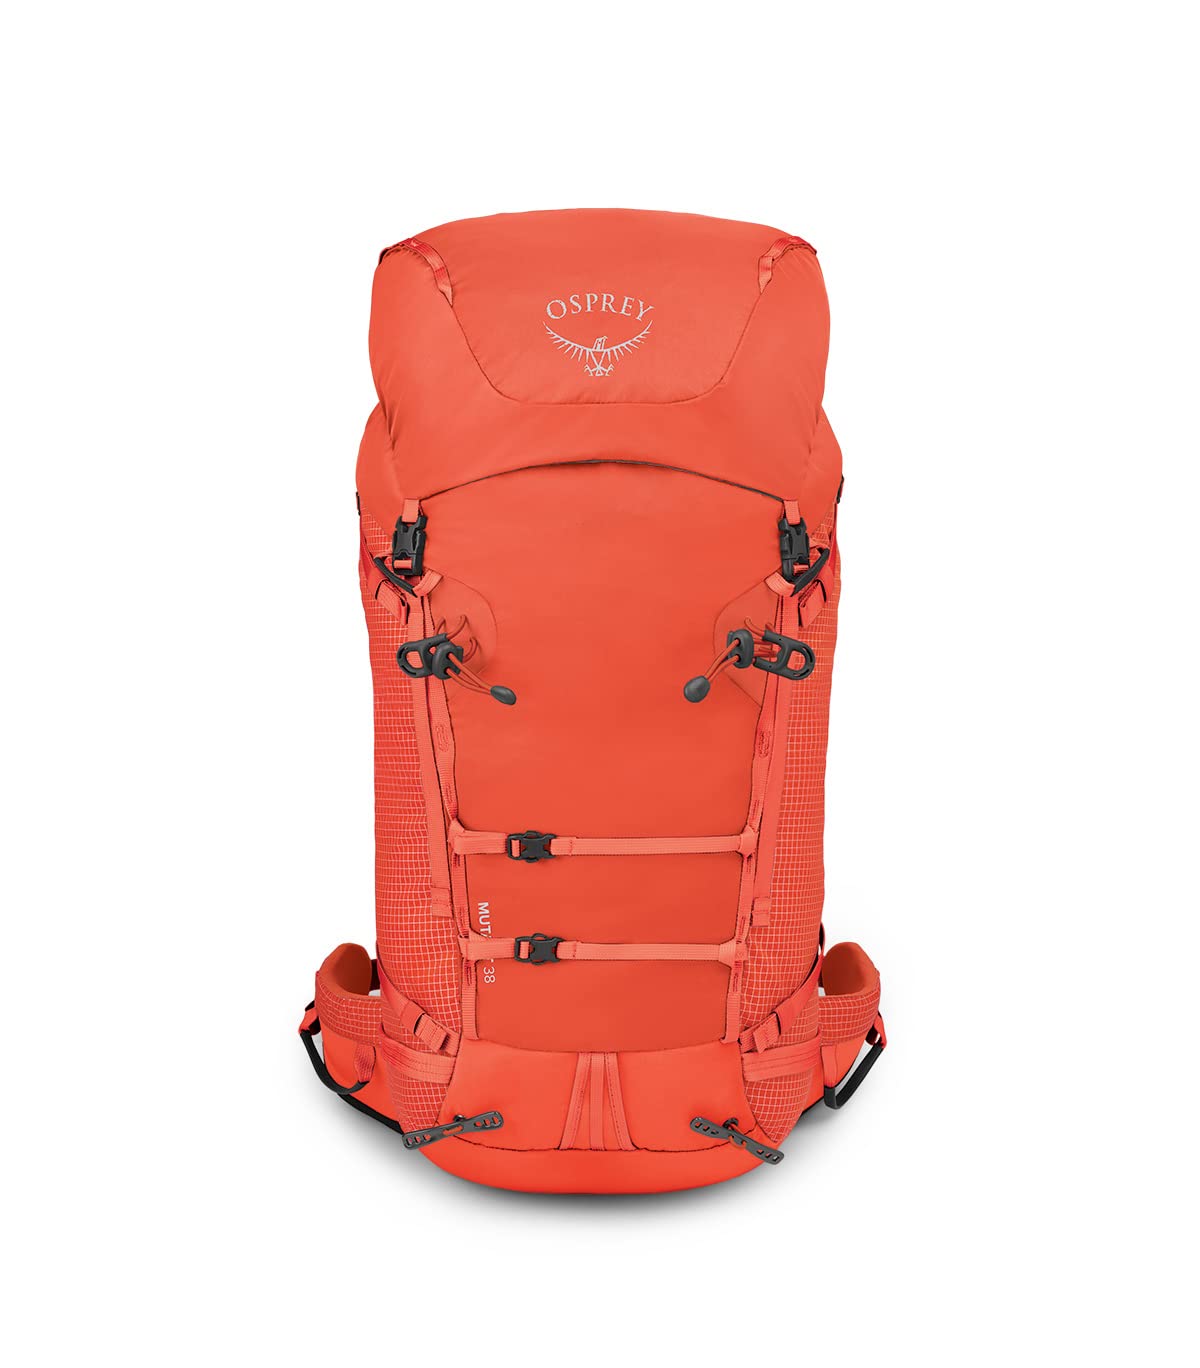 Osprey Mutant 38 Climbing and Mountaineering Backpack, Mars Orange, Medium/Large